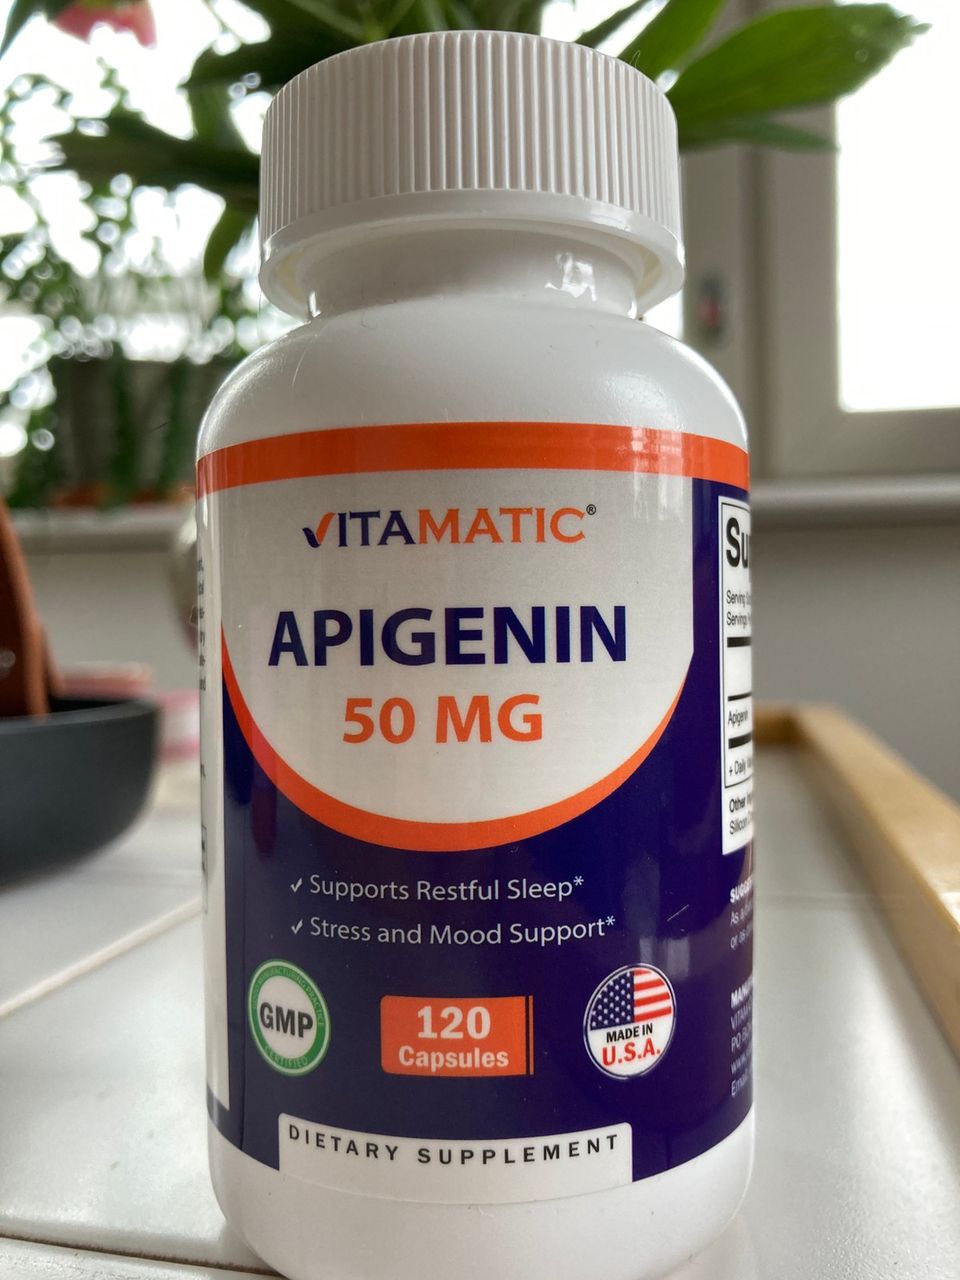 Vitamatic apigeniini